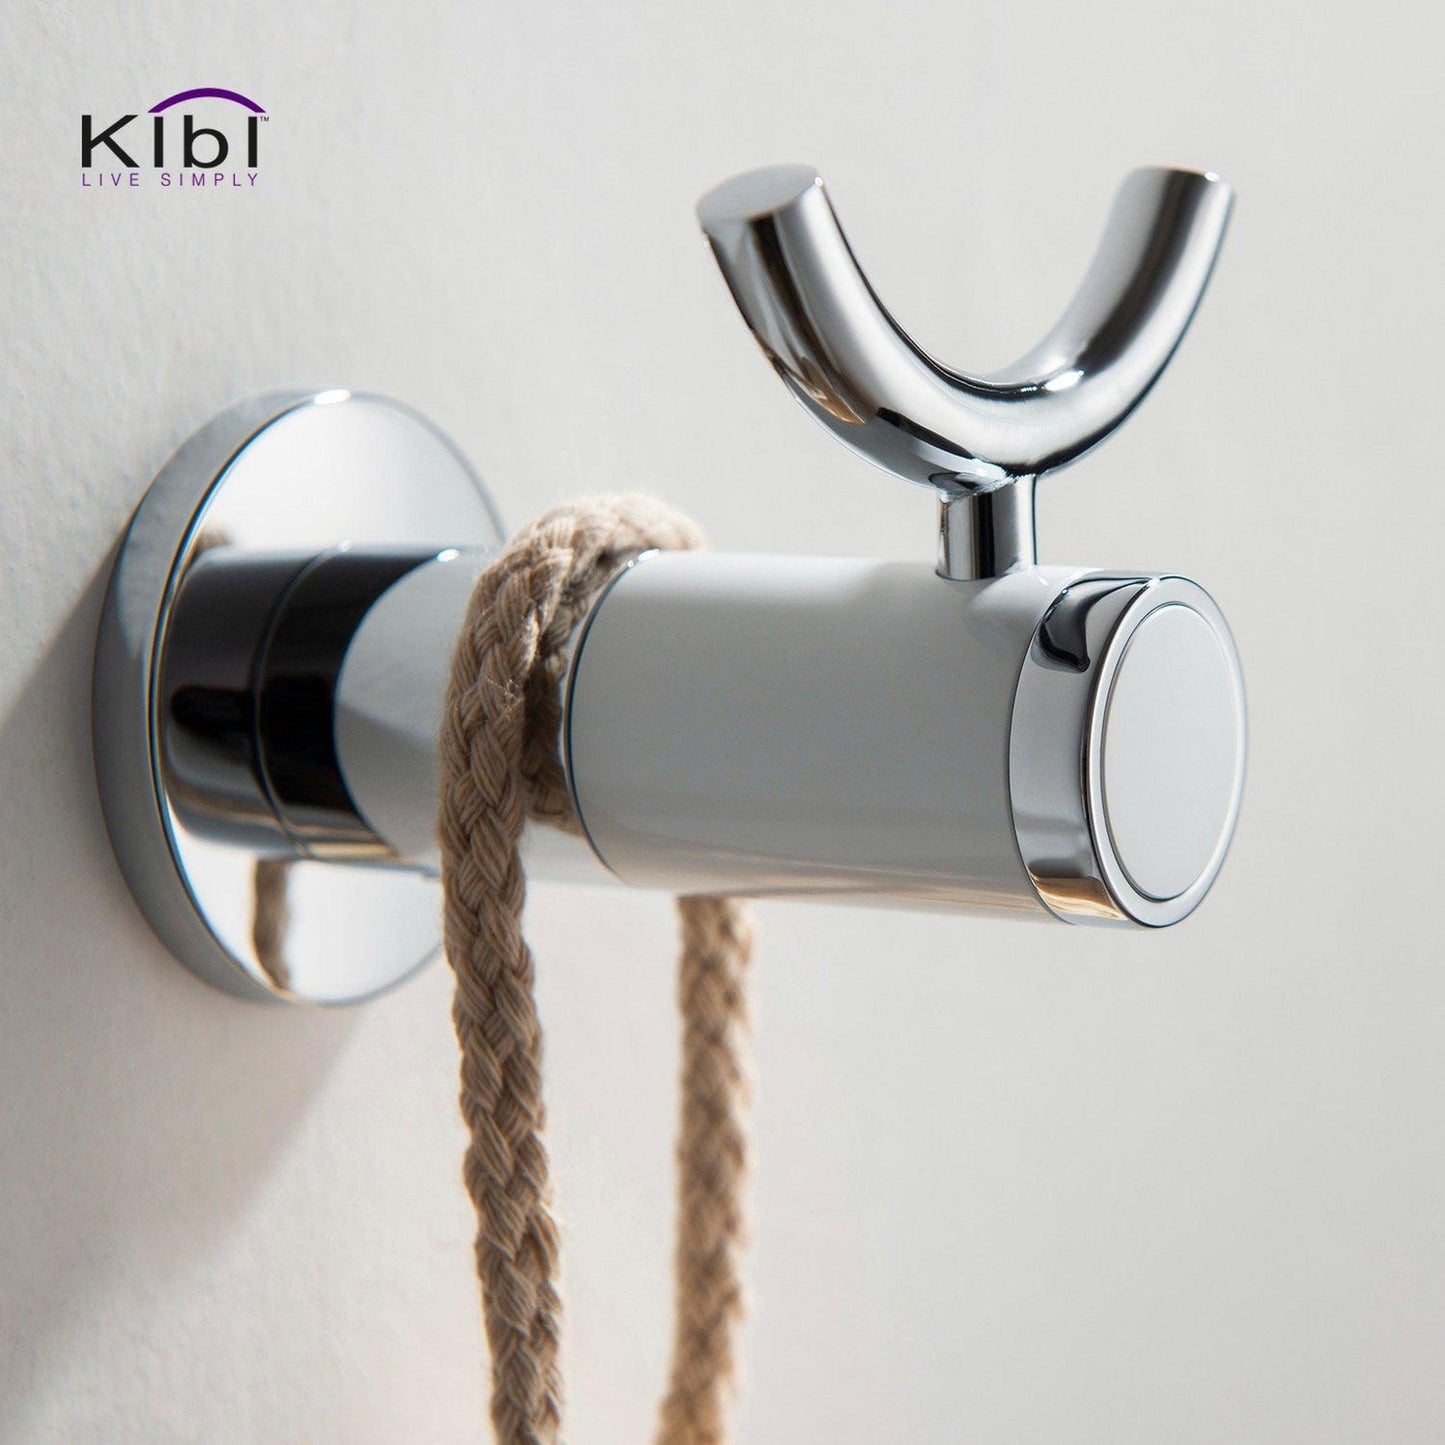 KIBI Abaco Bathroom Robe Hook in Chrome White Finish